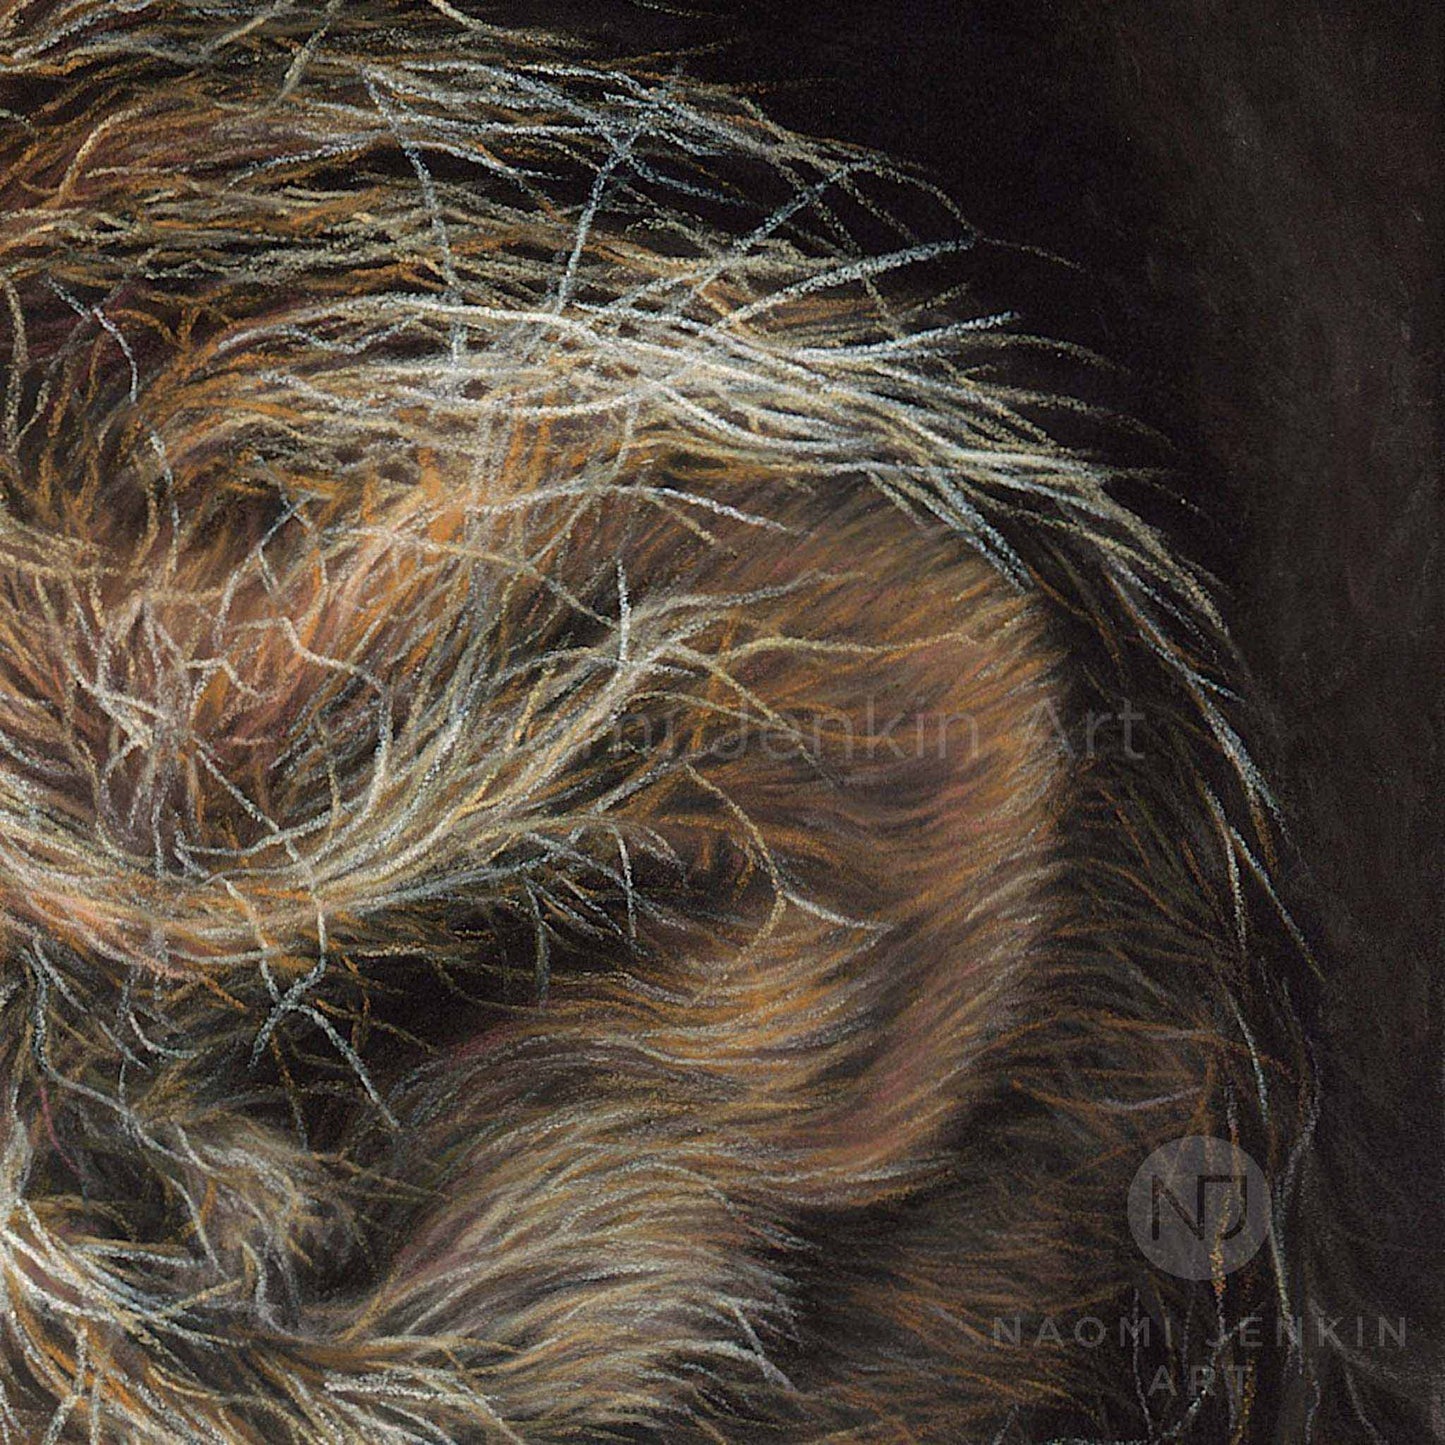 Close up of a lion's mane drawn by wildlife artist Naomi Jenkin